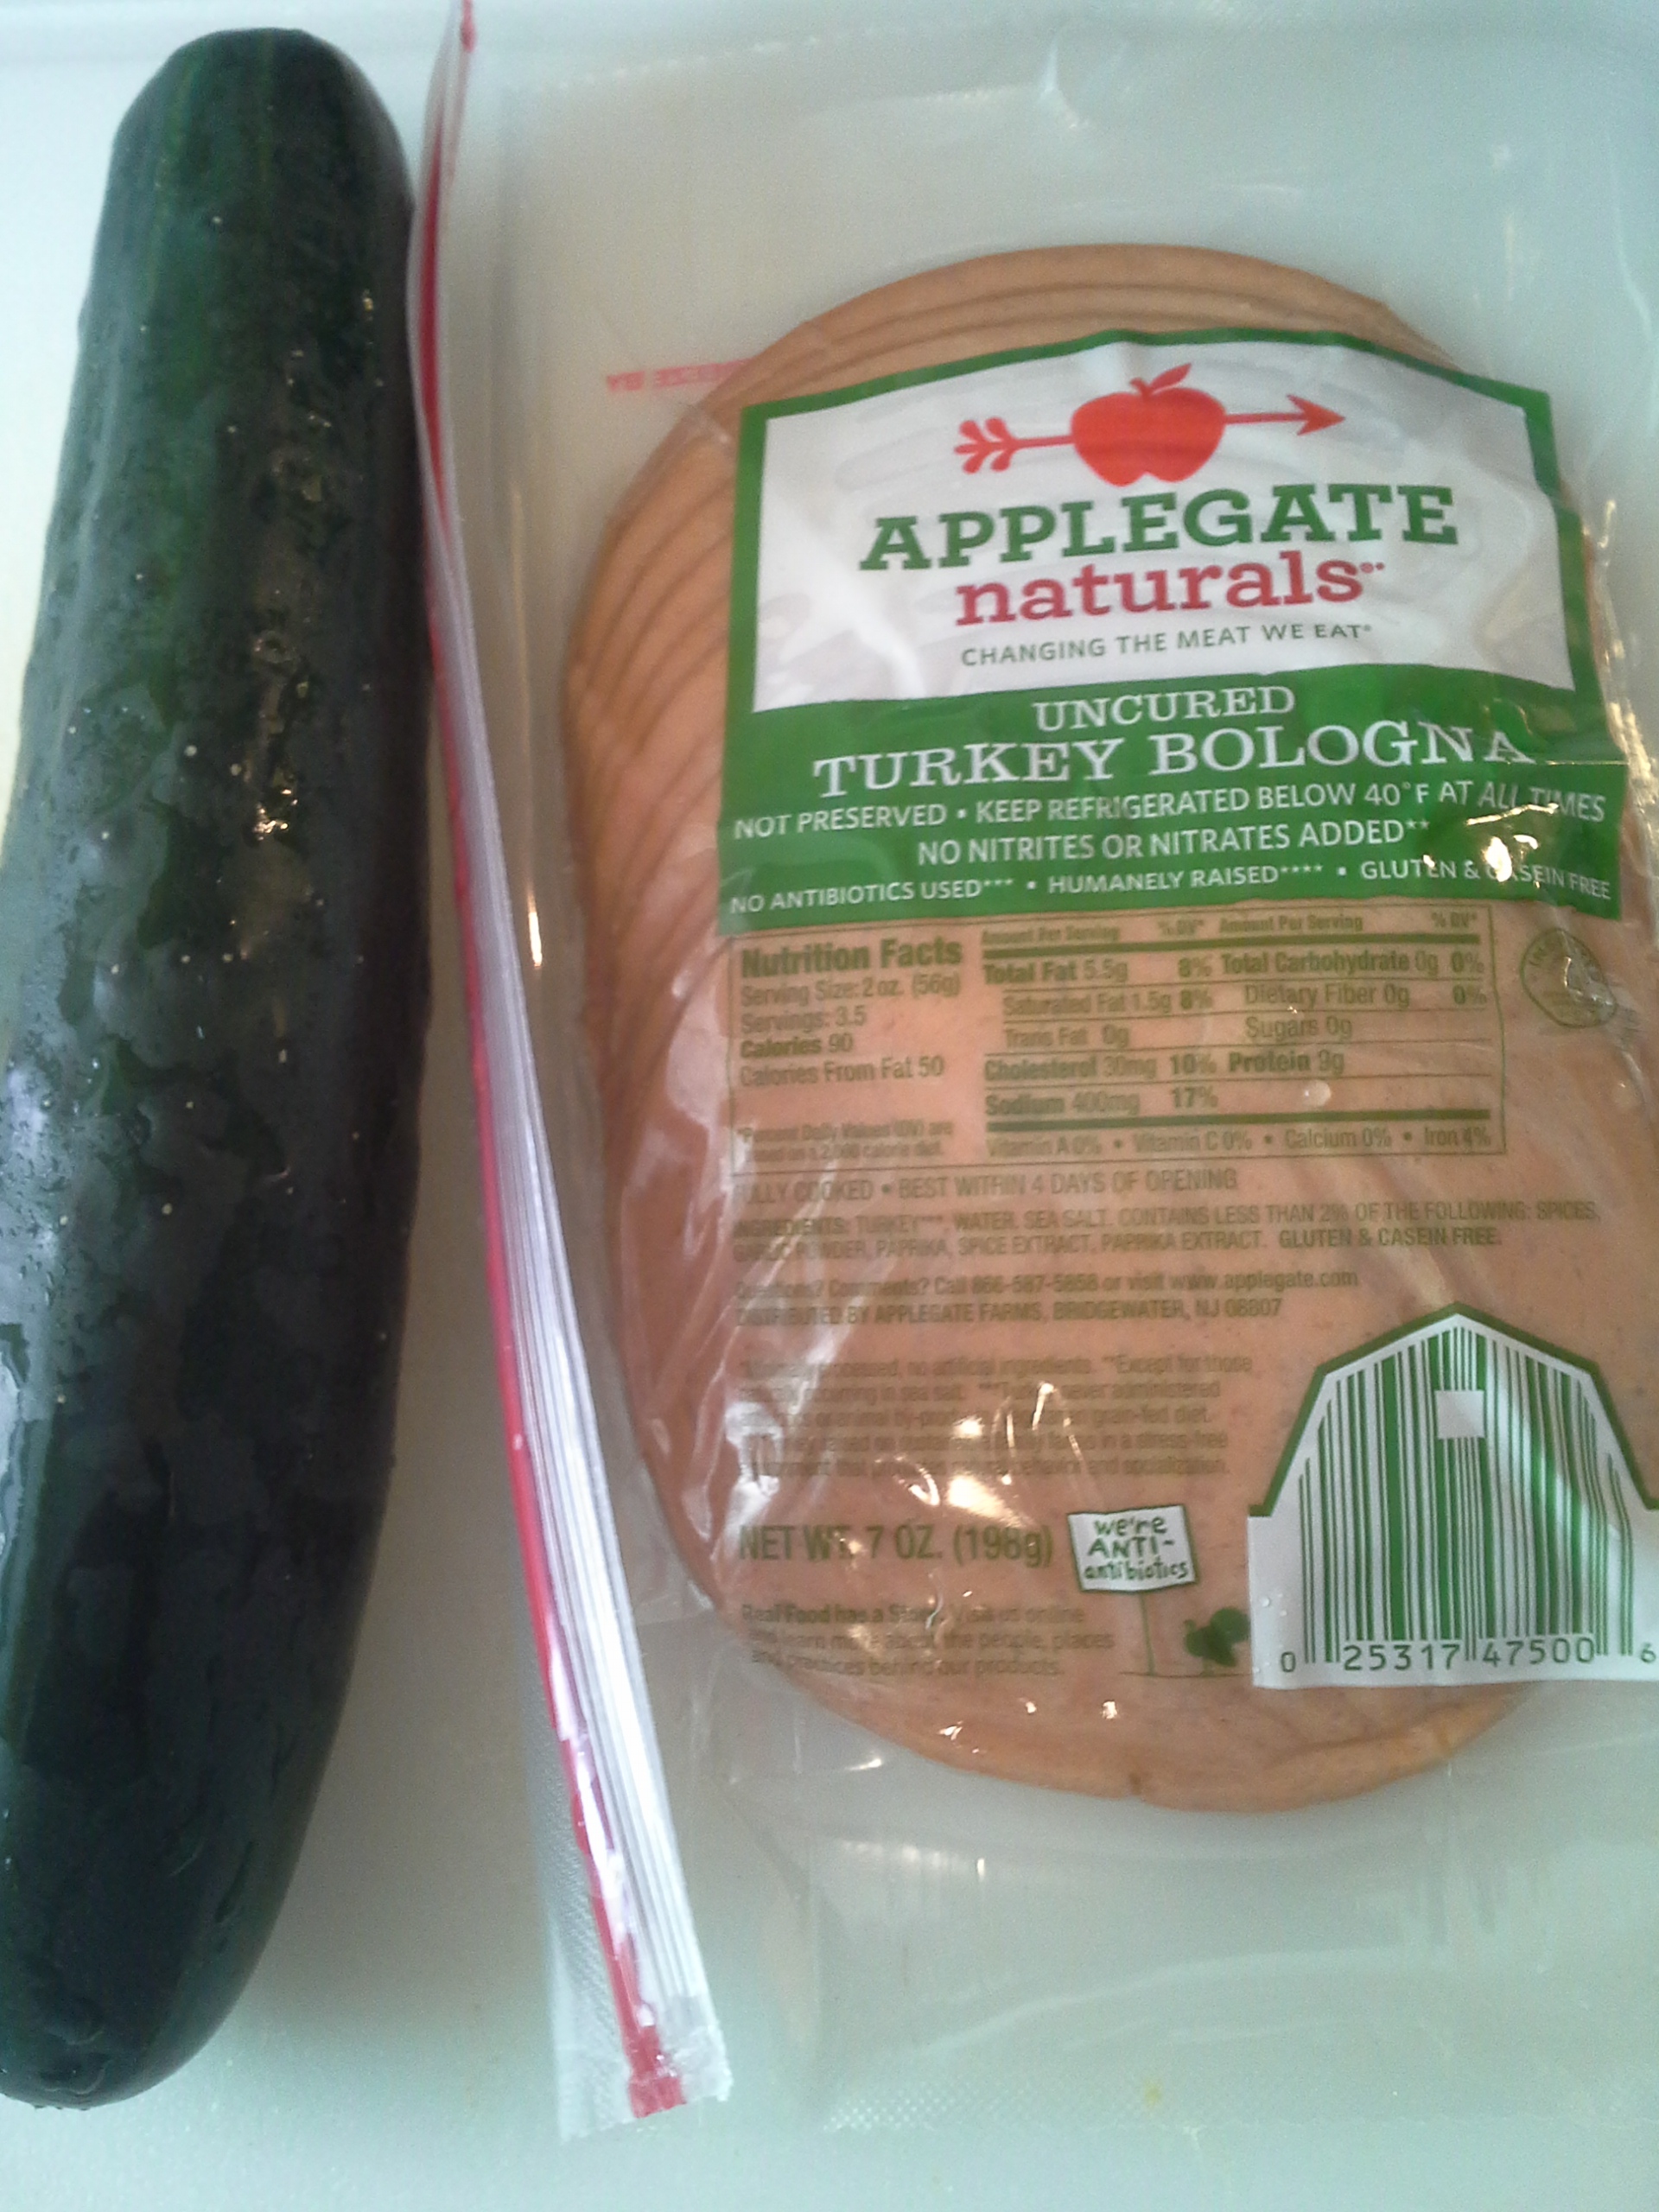 Lunch: 3:40 p.m. | 7 oz. turkey bologna, 1 cucumber